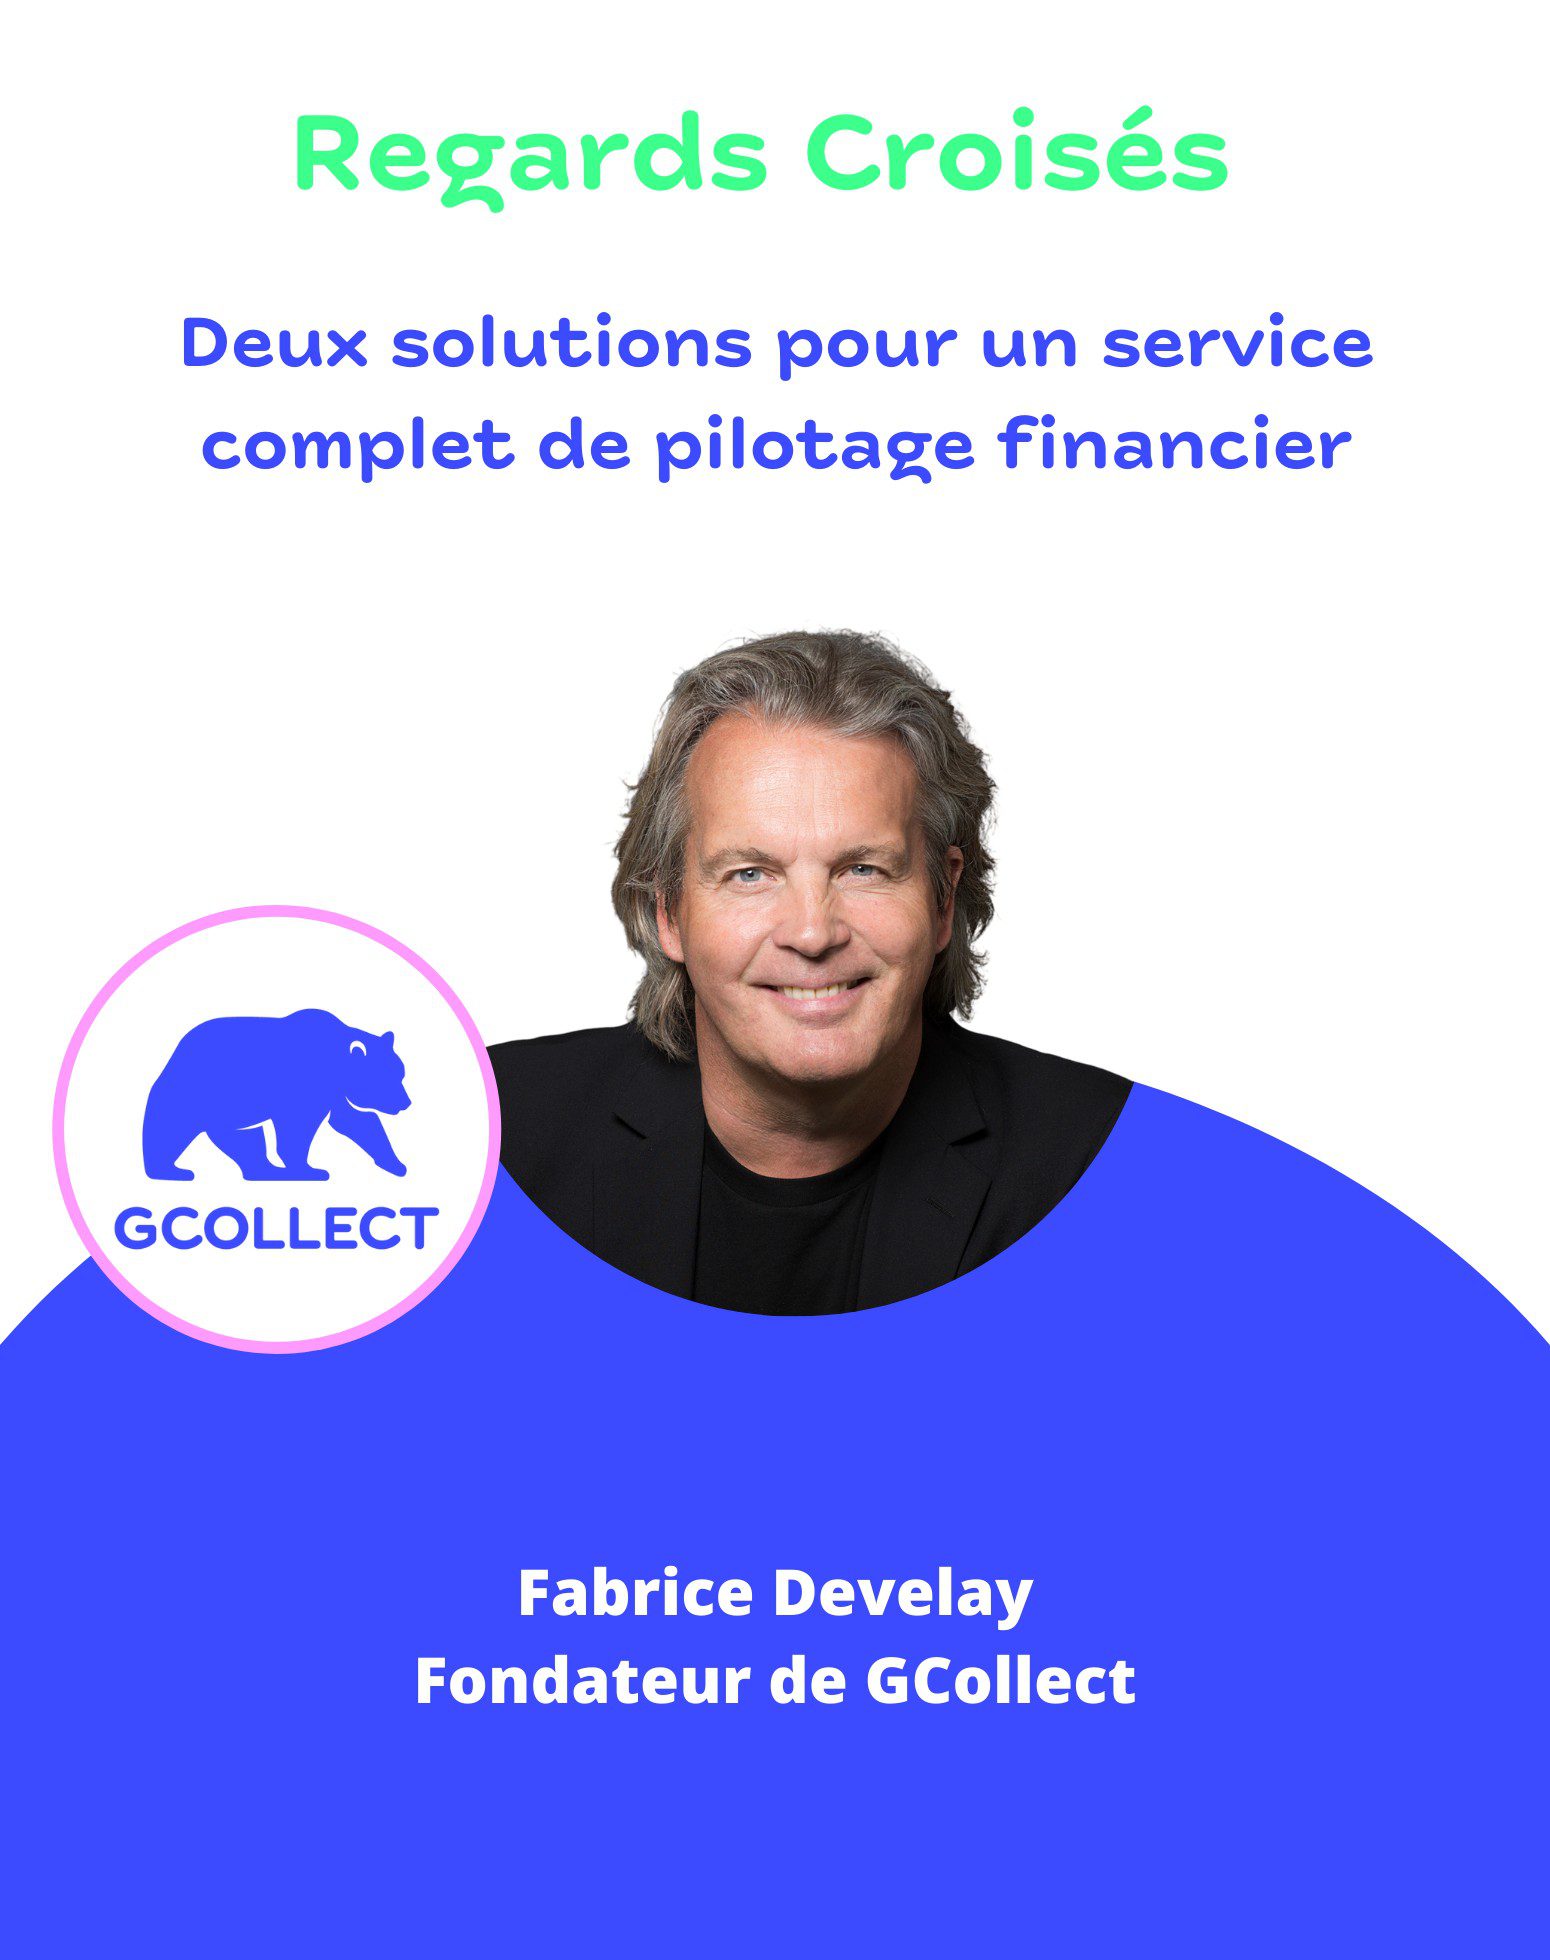 Fabrice Develay, fondateur de GCollect